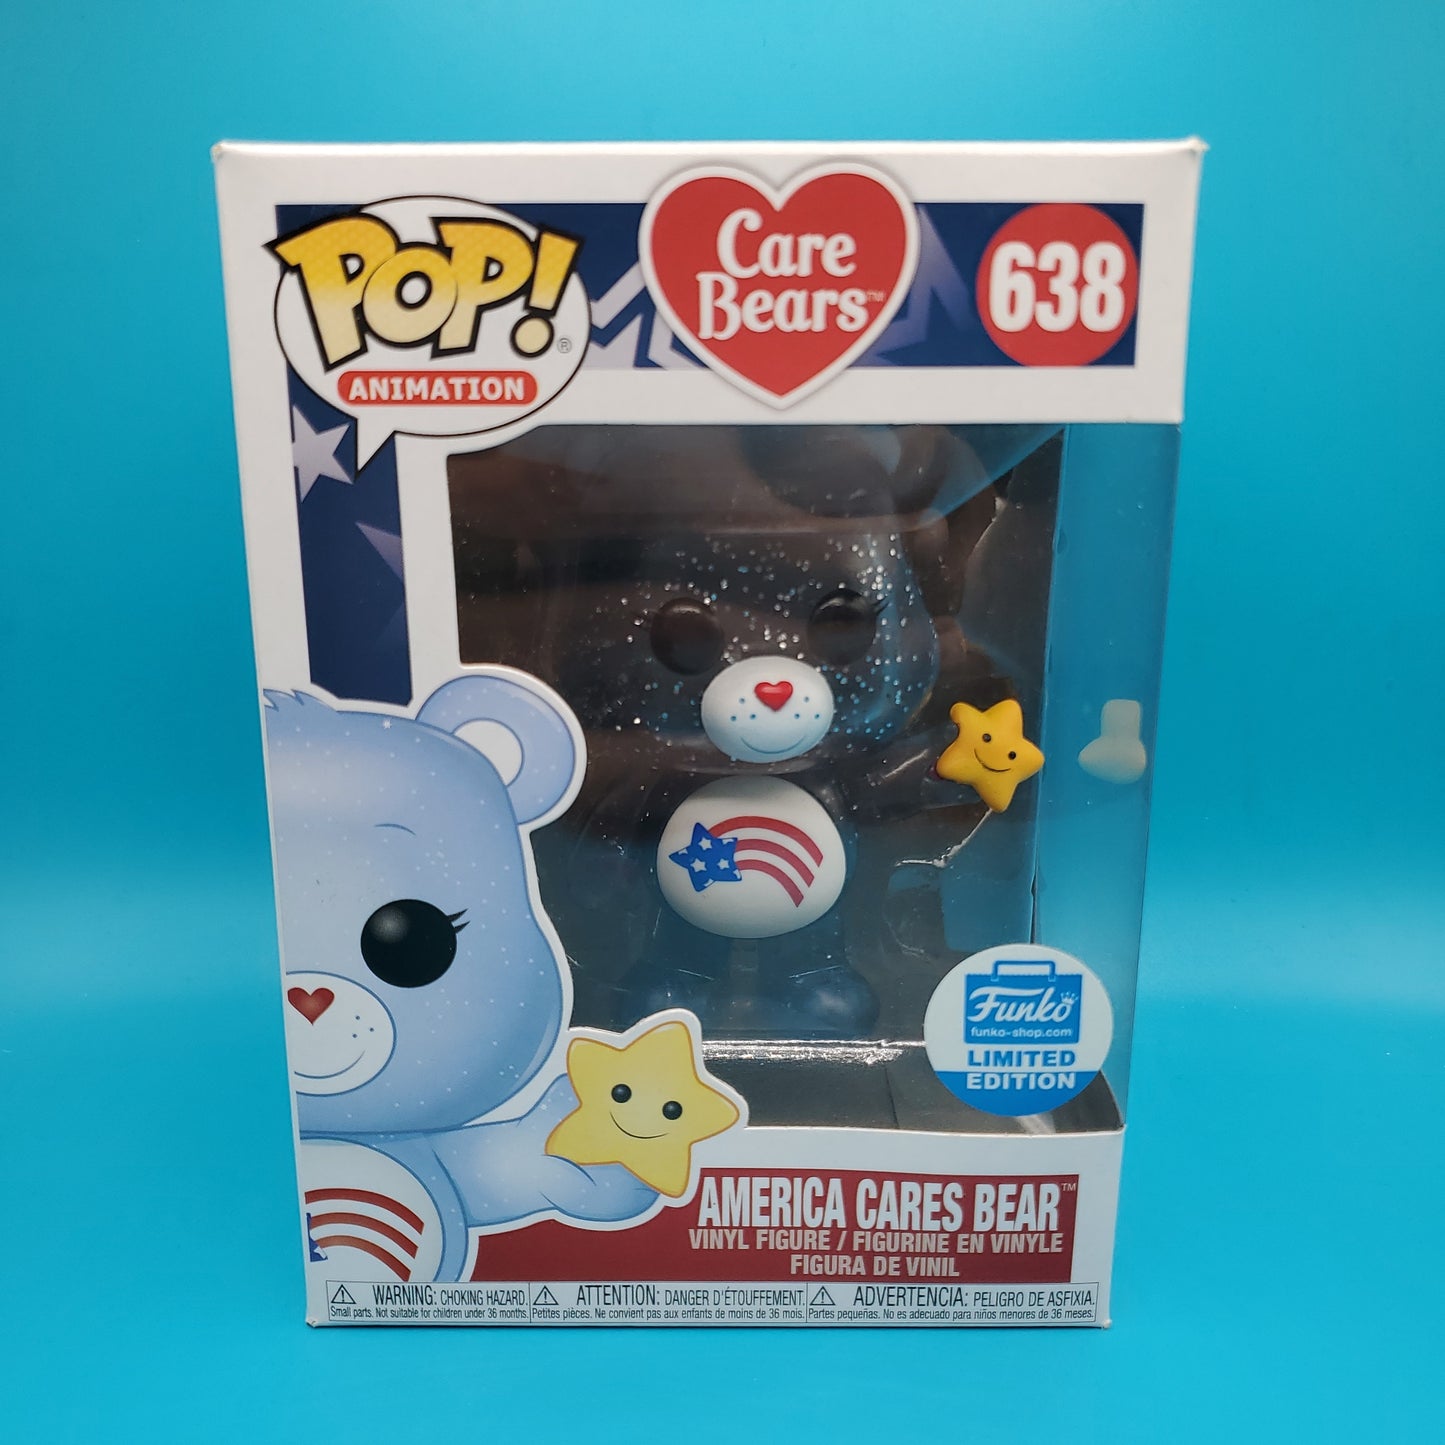 America Cares Bear - 638 - Care Bears - Funko Shop